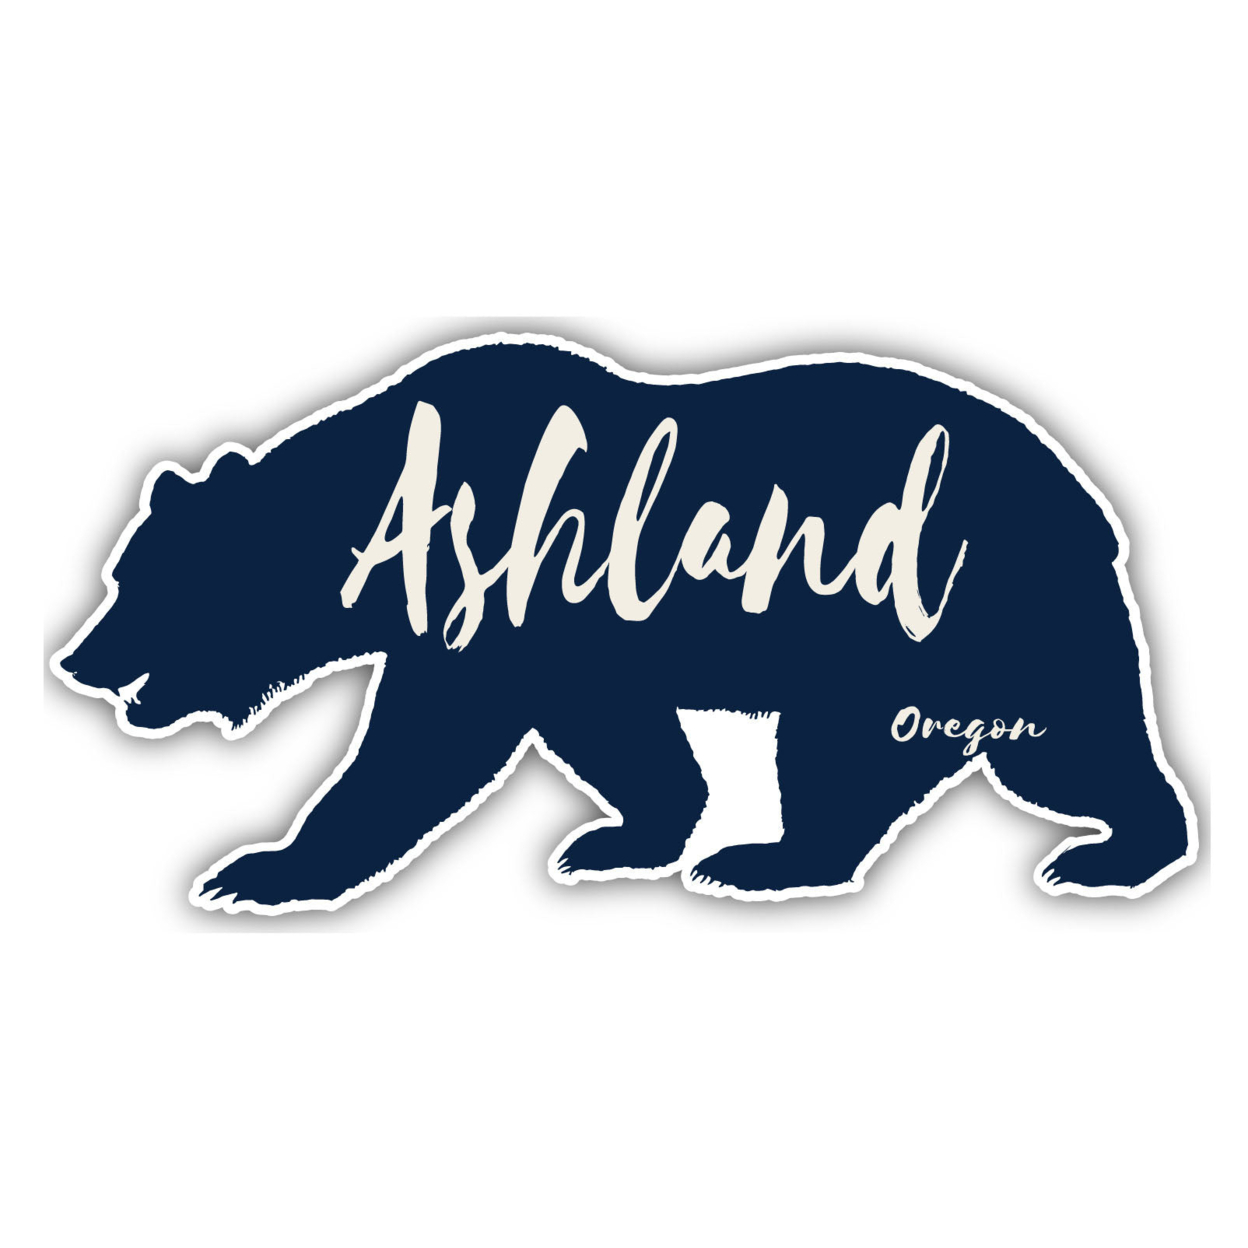 Ashland Oregon Souvenir Decorative Stickers (Choose Theme And Size) - Single Unit, 2-Inch, Bear